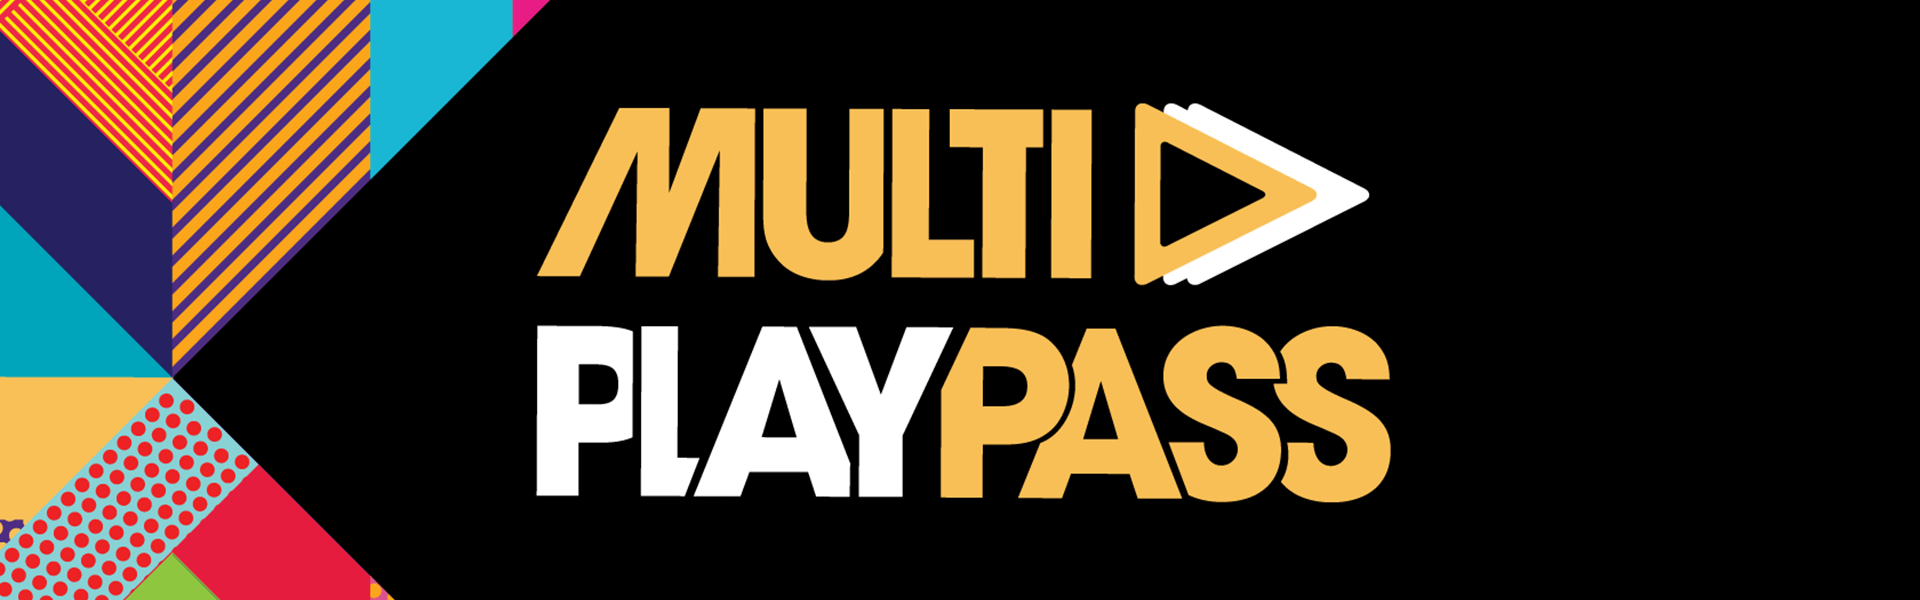 West Edmonton Mall Multi-Play Pass Title